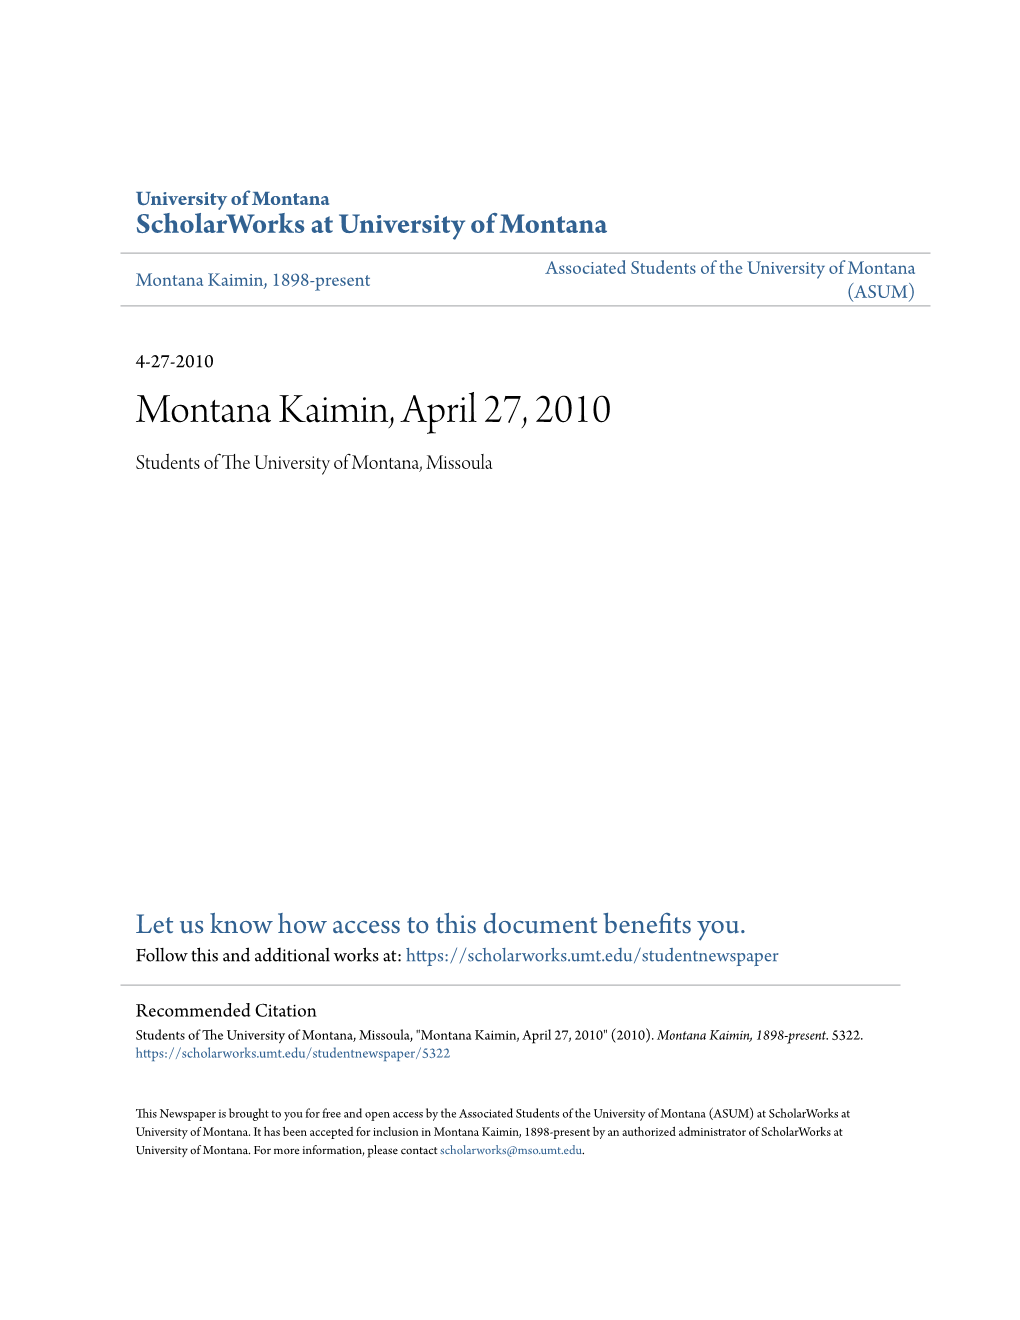 Montana Kaimin, April 27, 2010 Students of the Niu Versity of Montana, Missoula